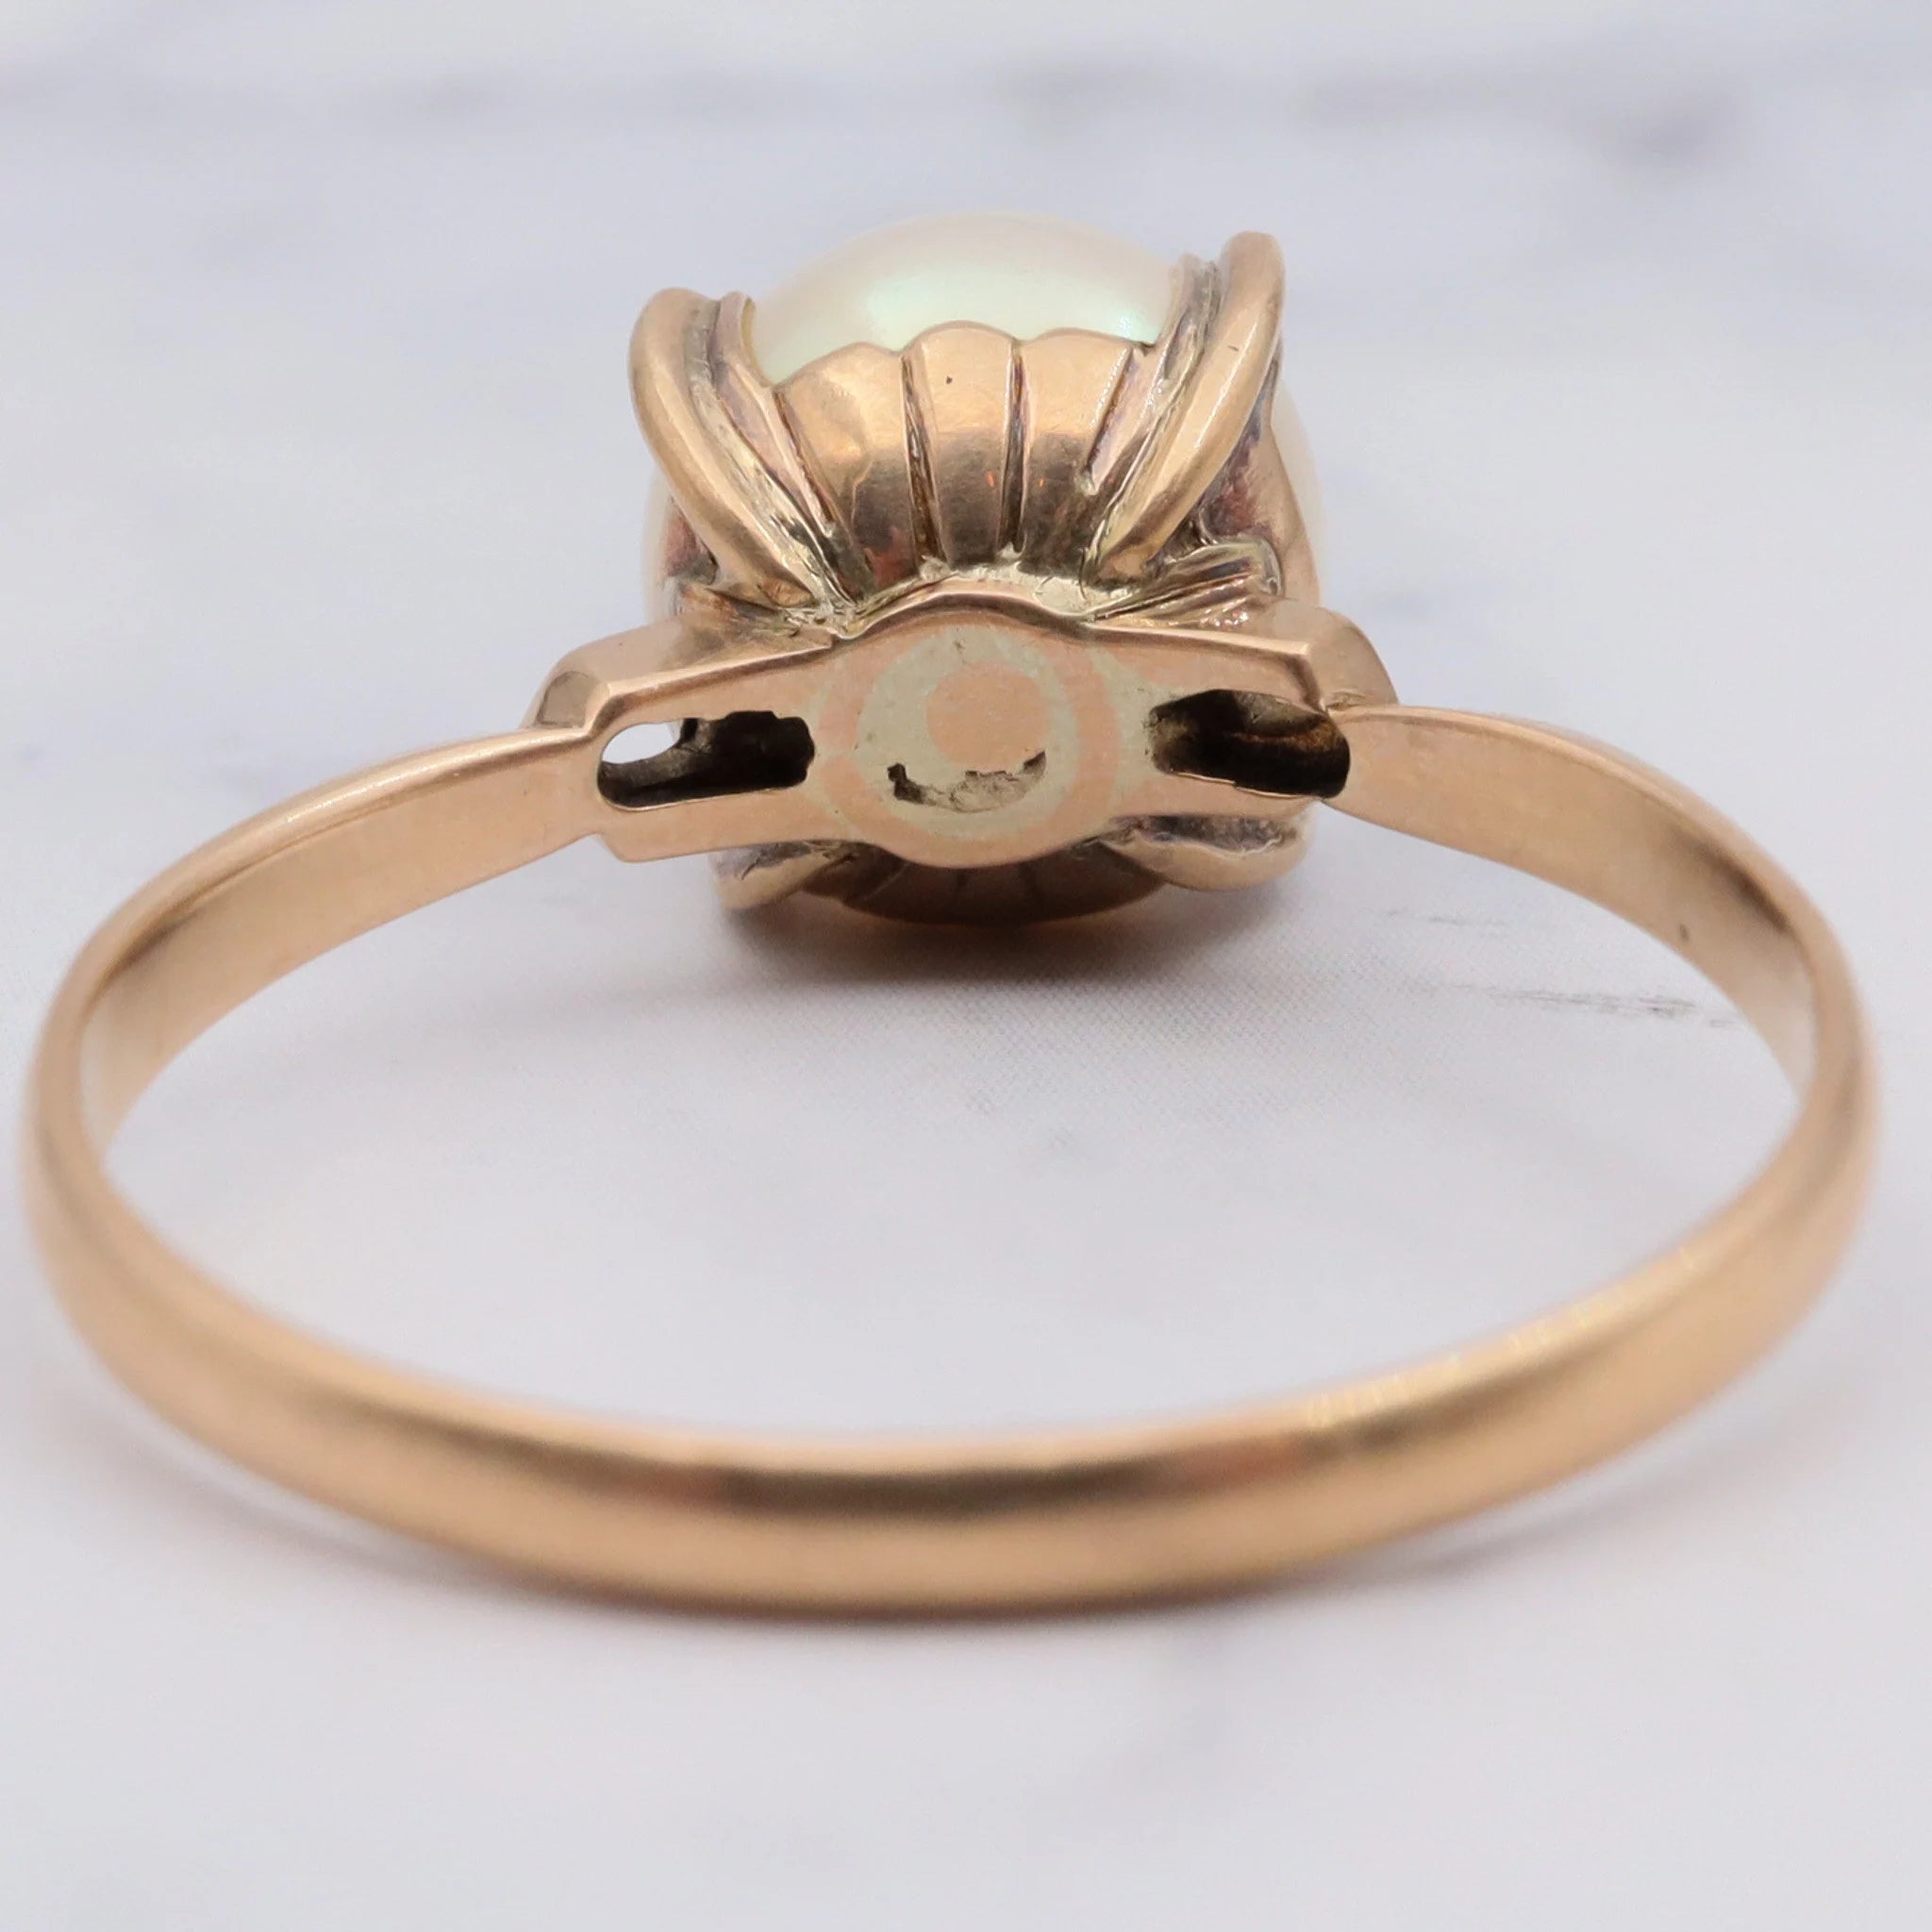 Vintage Art Deco Japanese 14K Gold Pearl Ring - Size 7.25